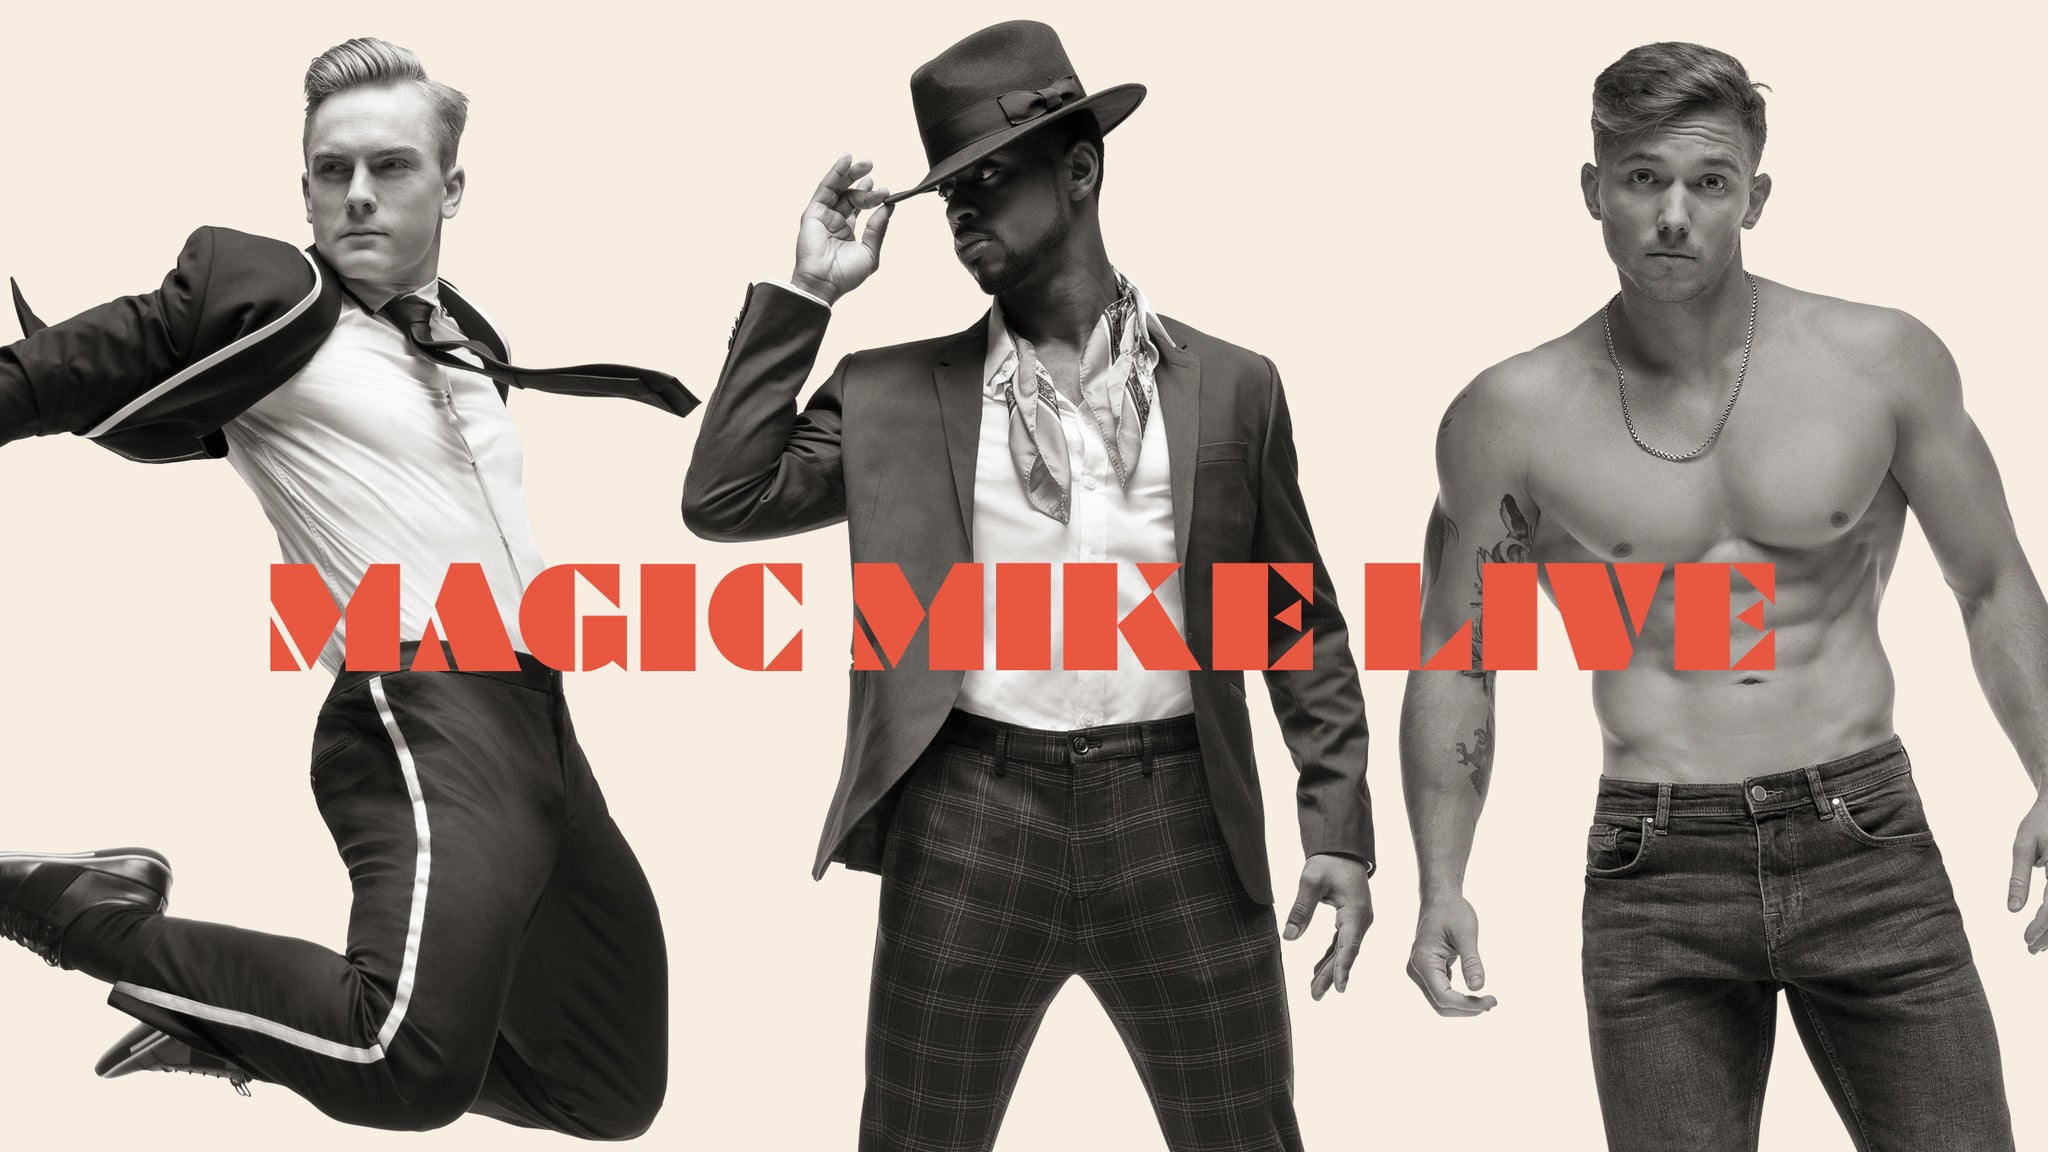 Magic Mike Live (Las Vegas) in Las Vegas promo photo for Exclusive presale offer code